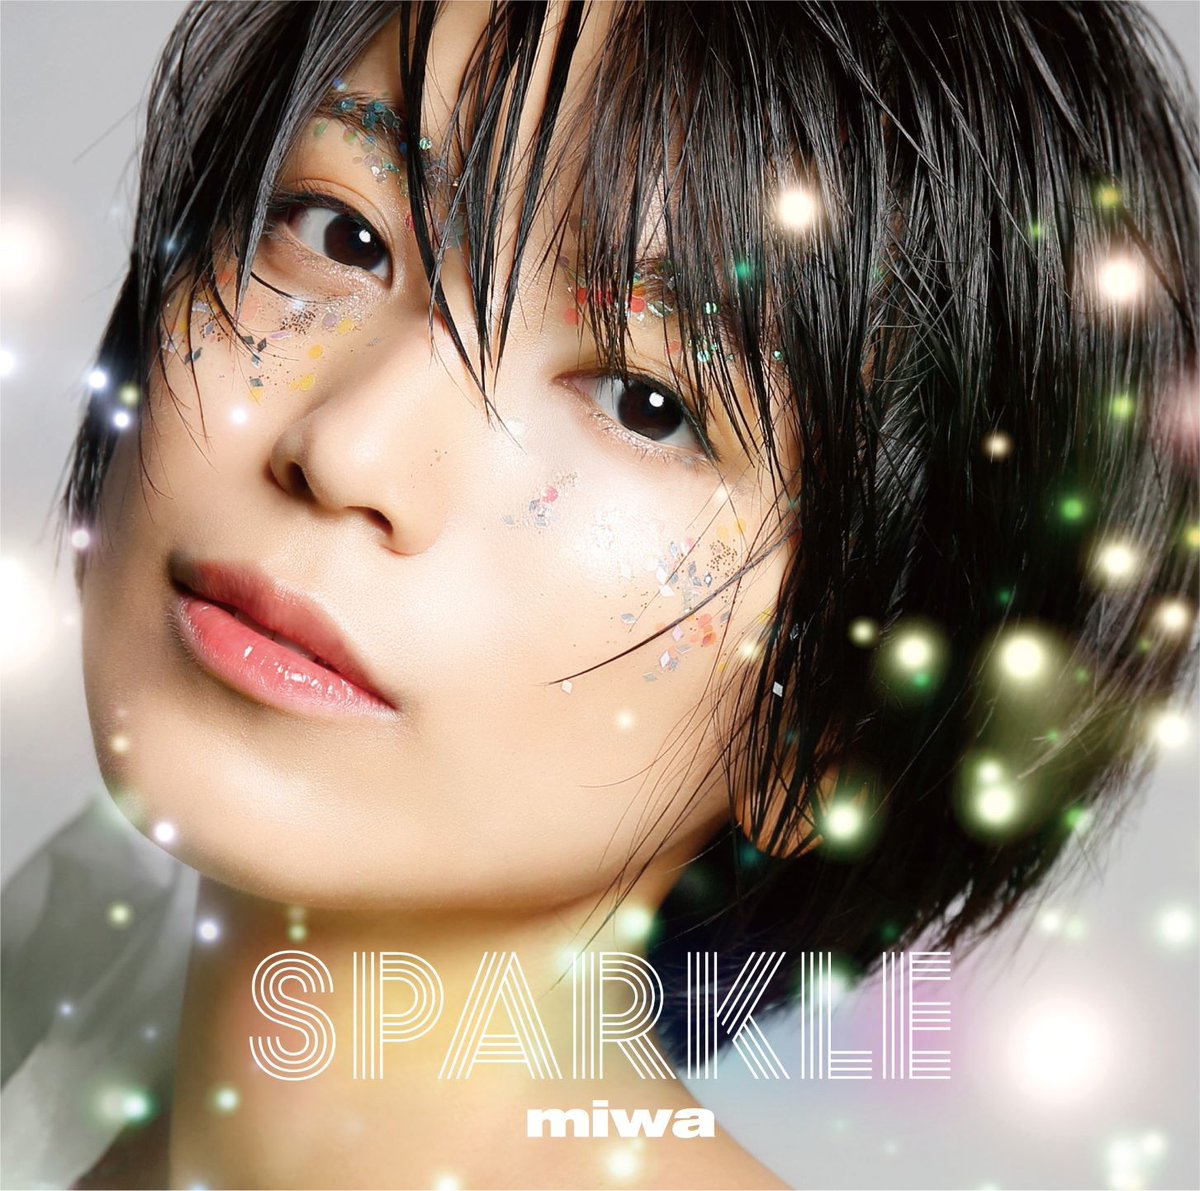 『miwa - CLEAR 歌詞』収録の『Sparkle』ジャケット